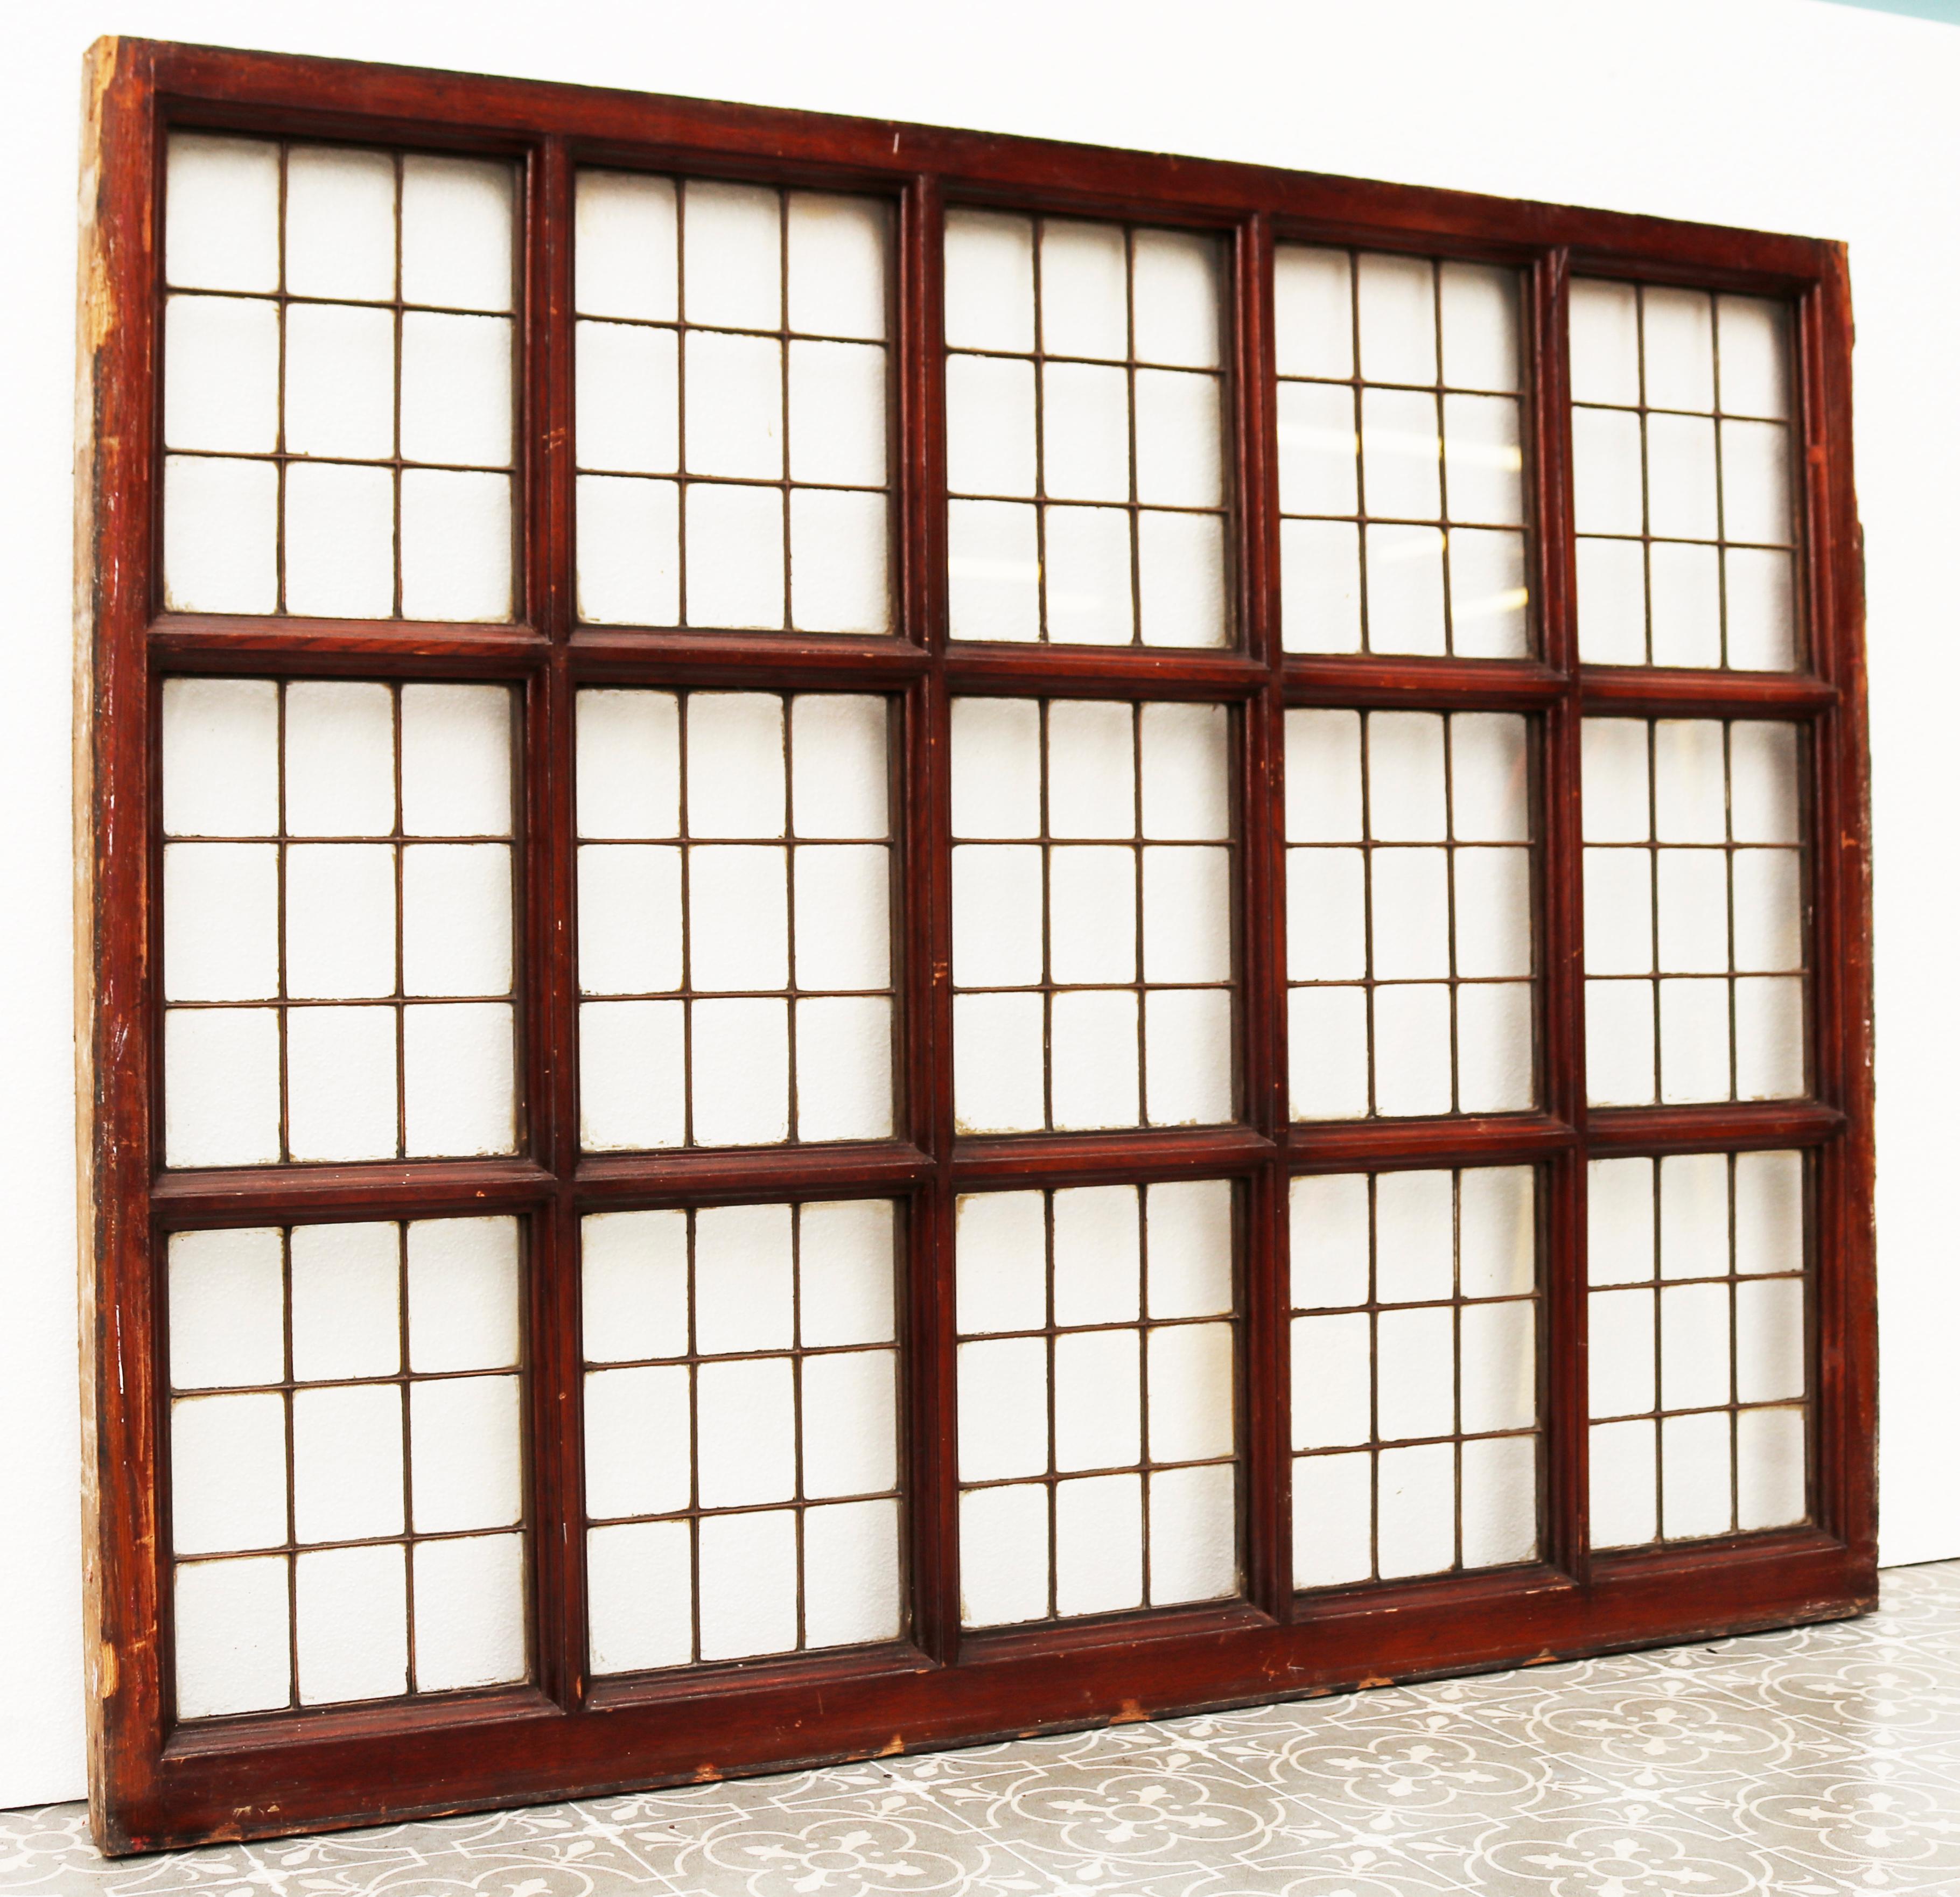 Glazed copper light window panel. Teak window panel with 15 copper light panels.